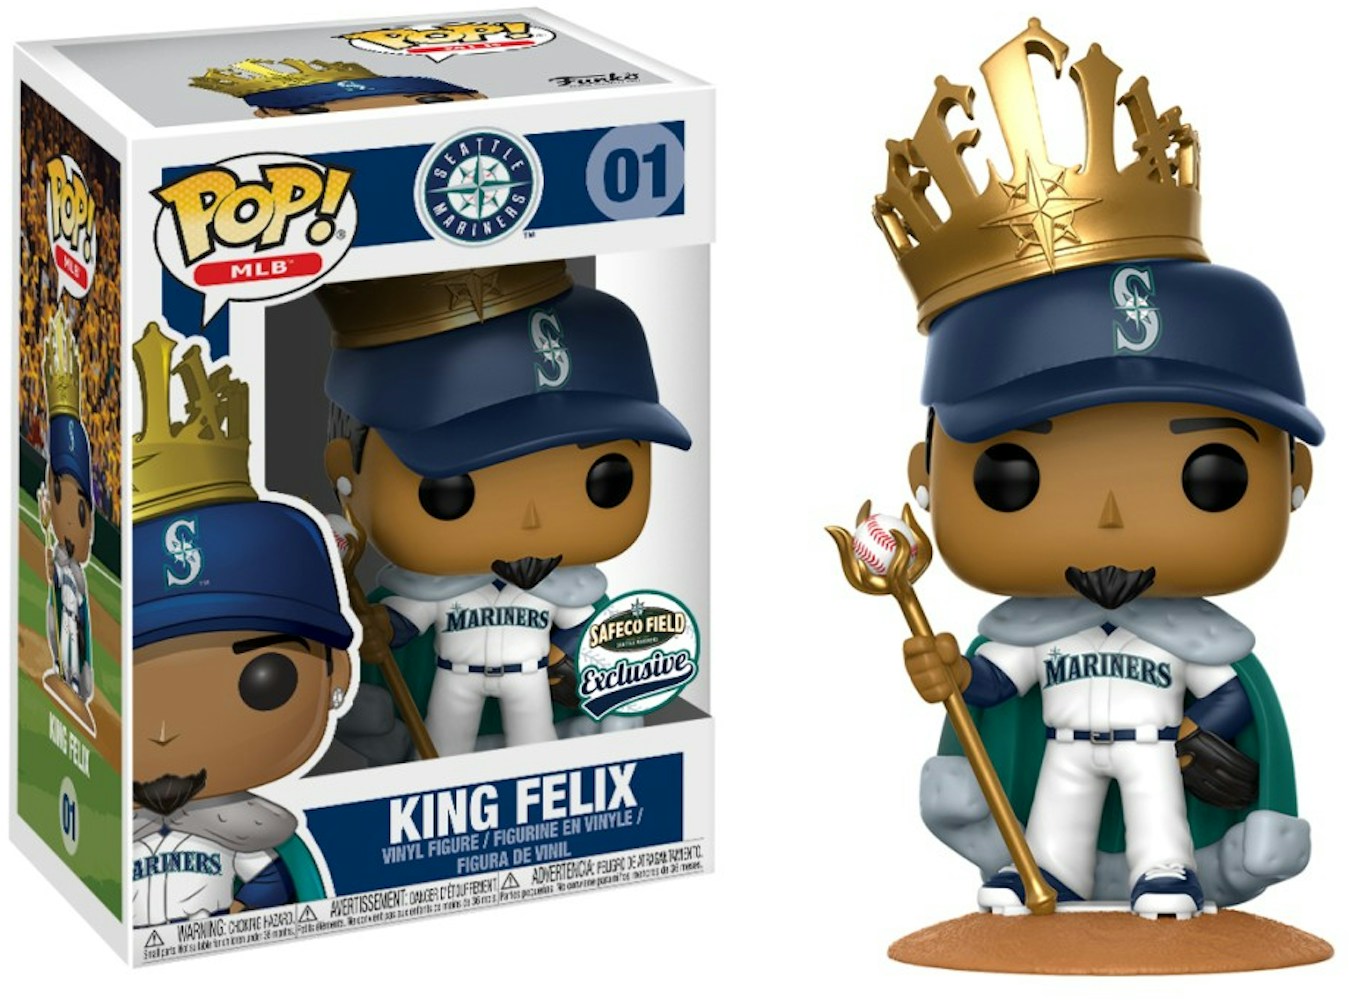 Funko Pop! Sports MLB Felix Hernandez "King Felix" Safeco Field